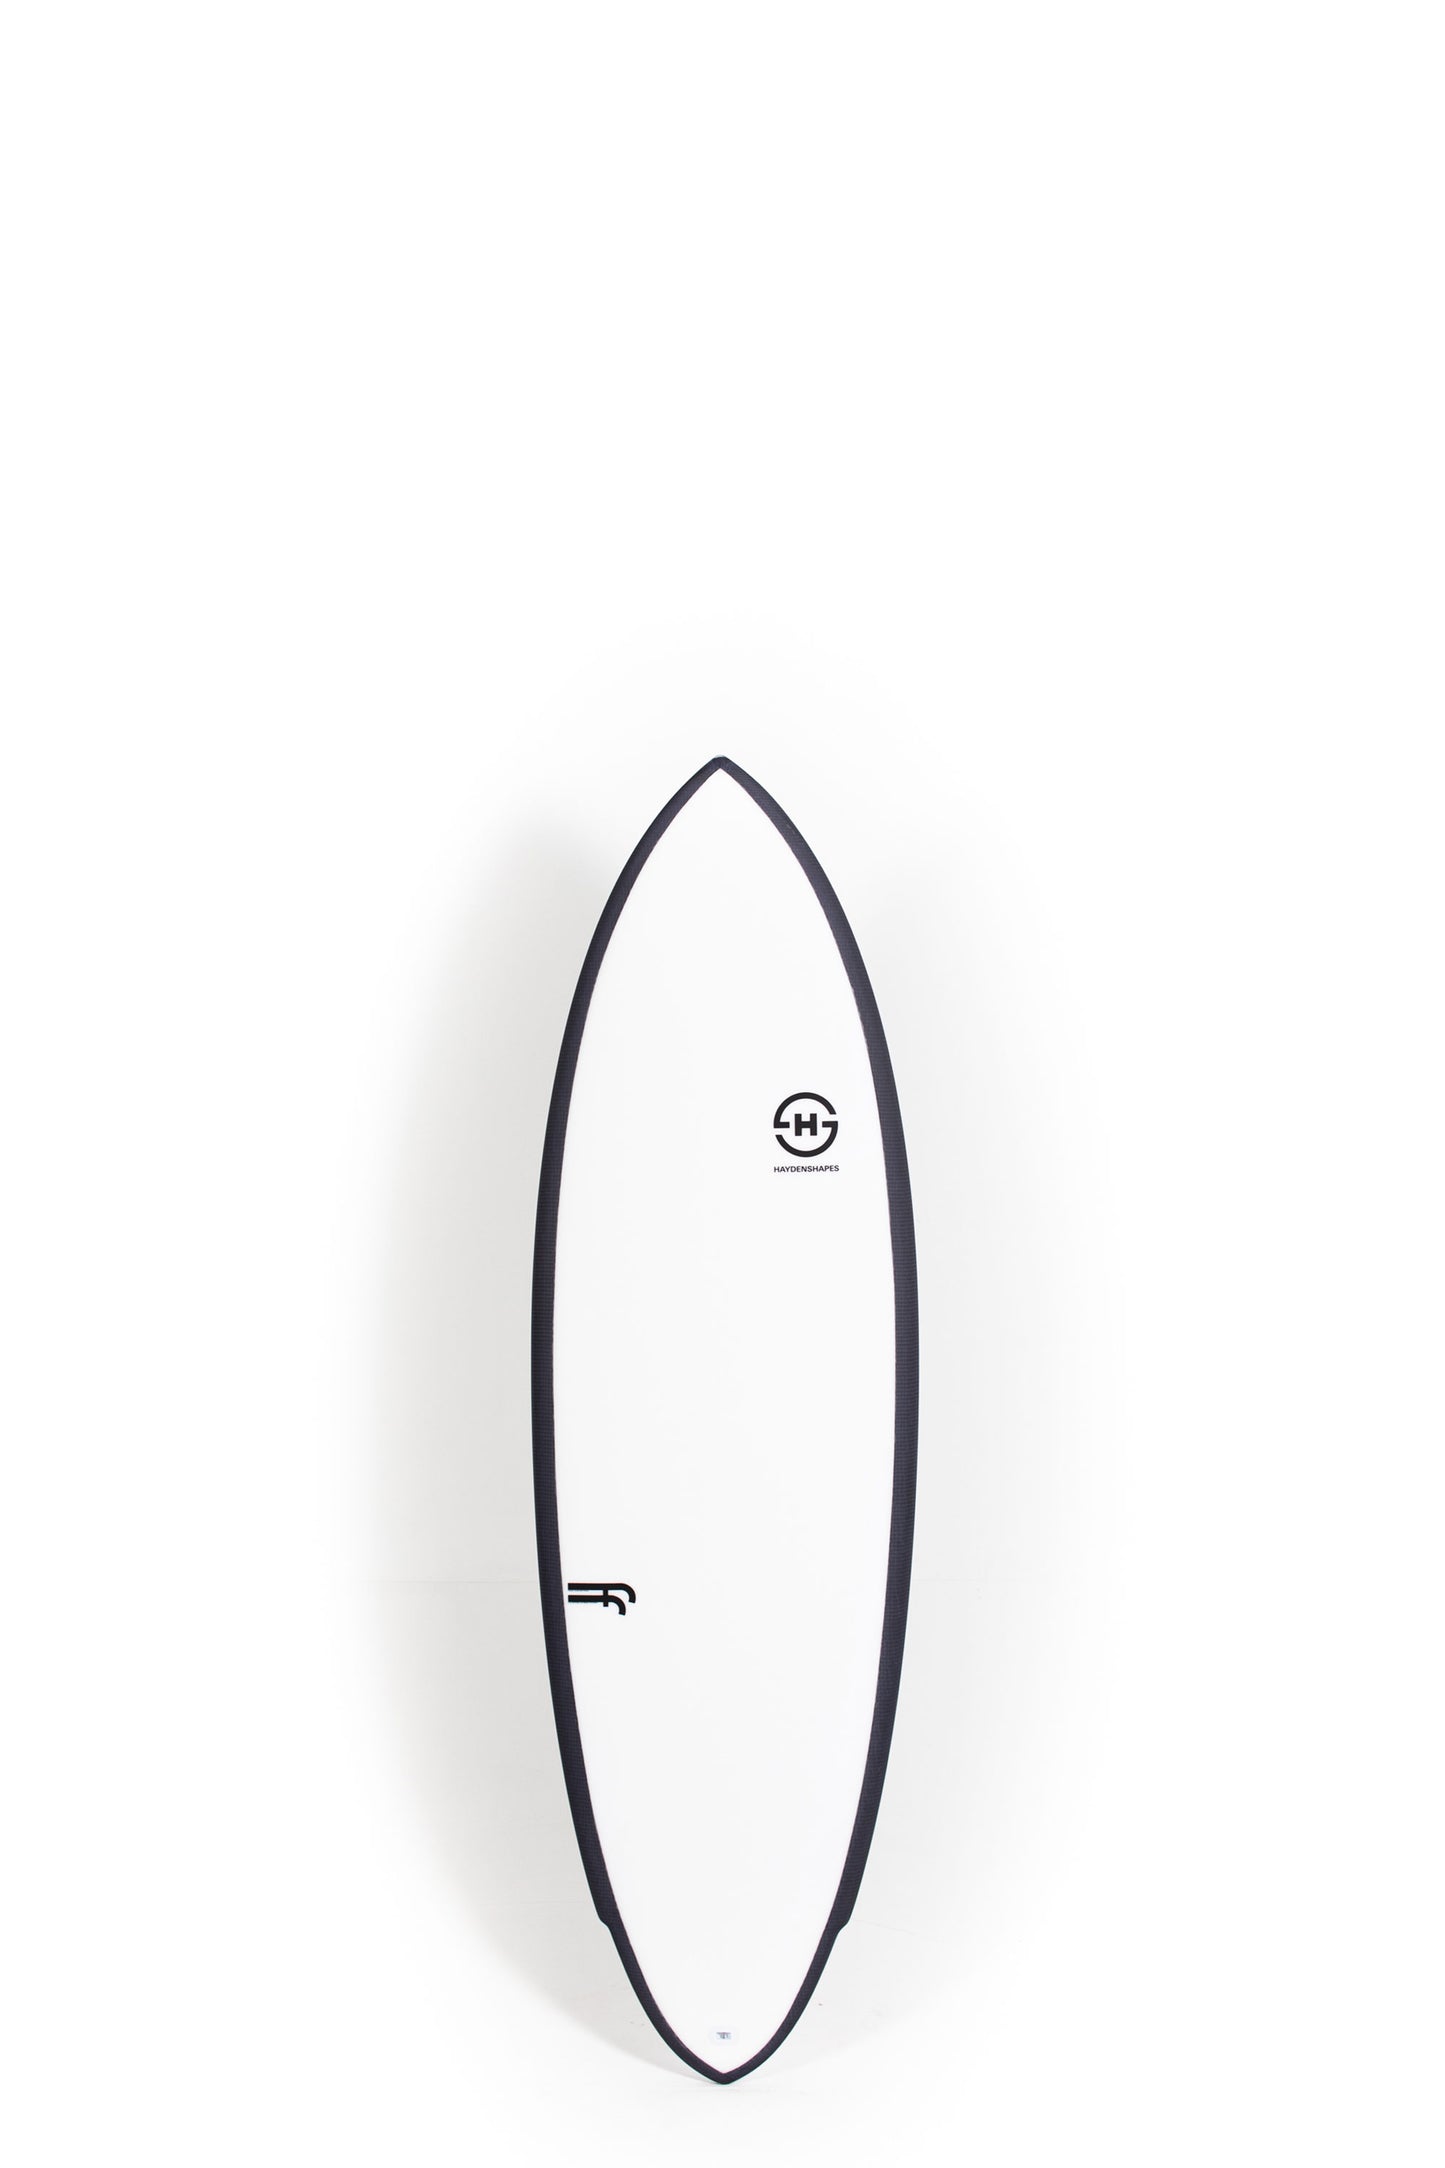 Pukas Surf Shop - HaydenShapes Surfboard - HYPTO KRYPTO TWIN PIN - 5'8" X 20" X 2 1/2" - 30.95L